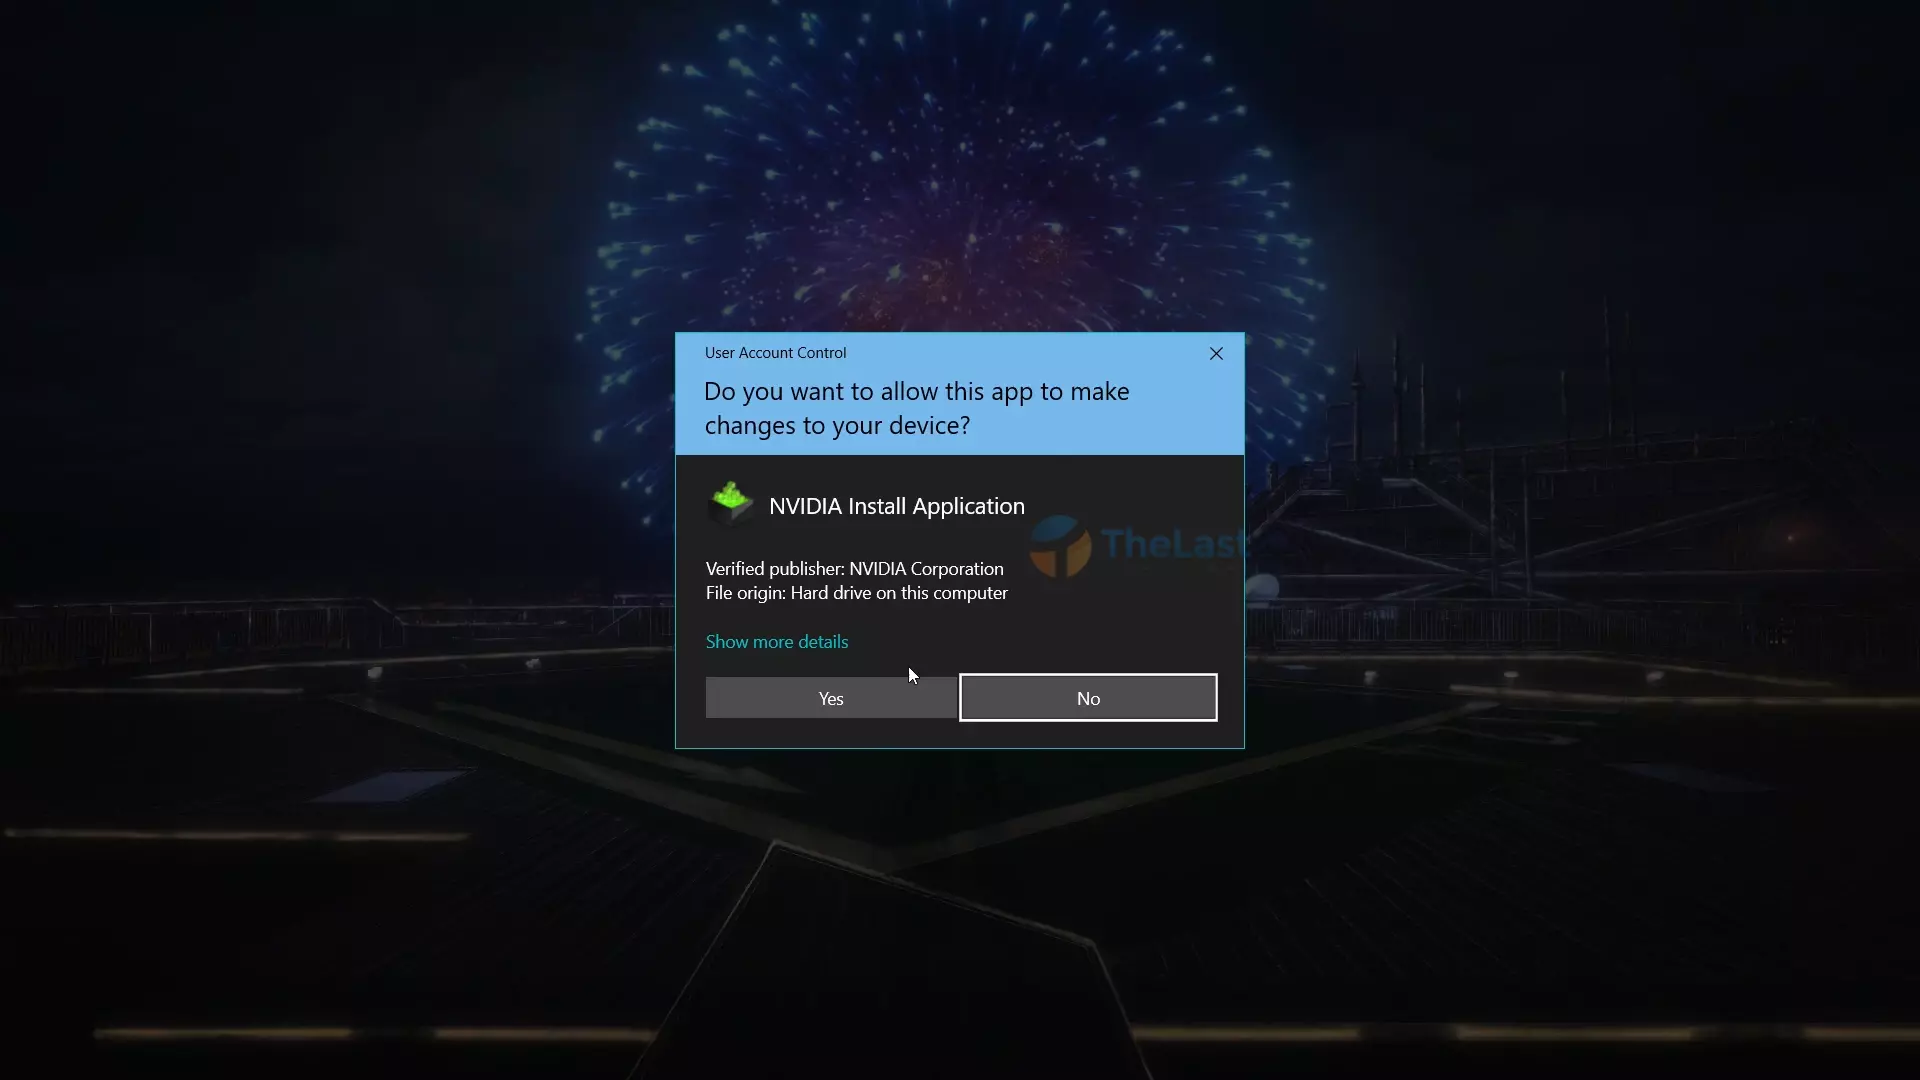 Yes Nvidia Install Application